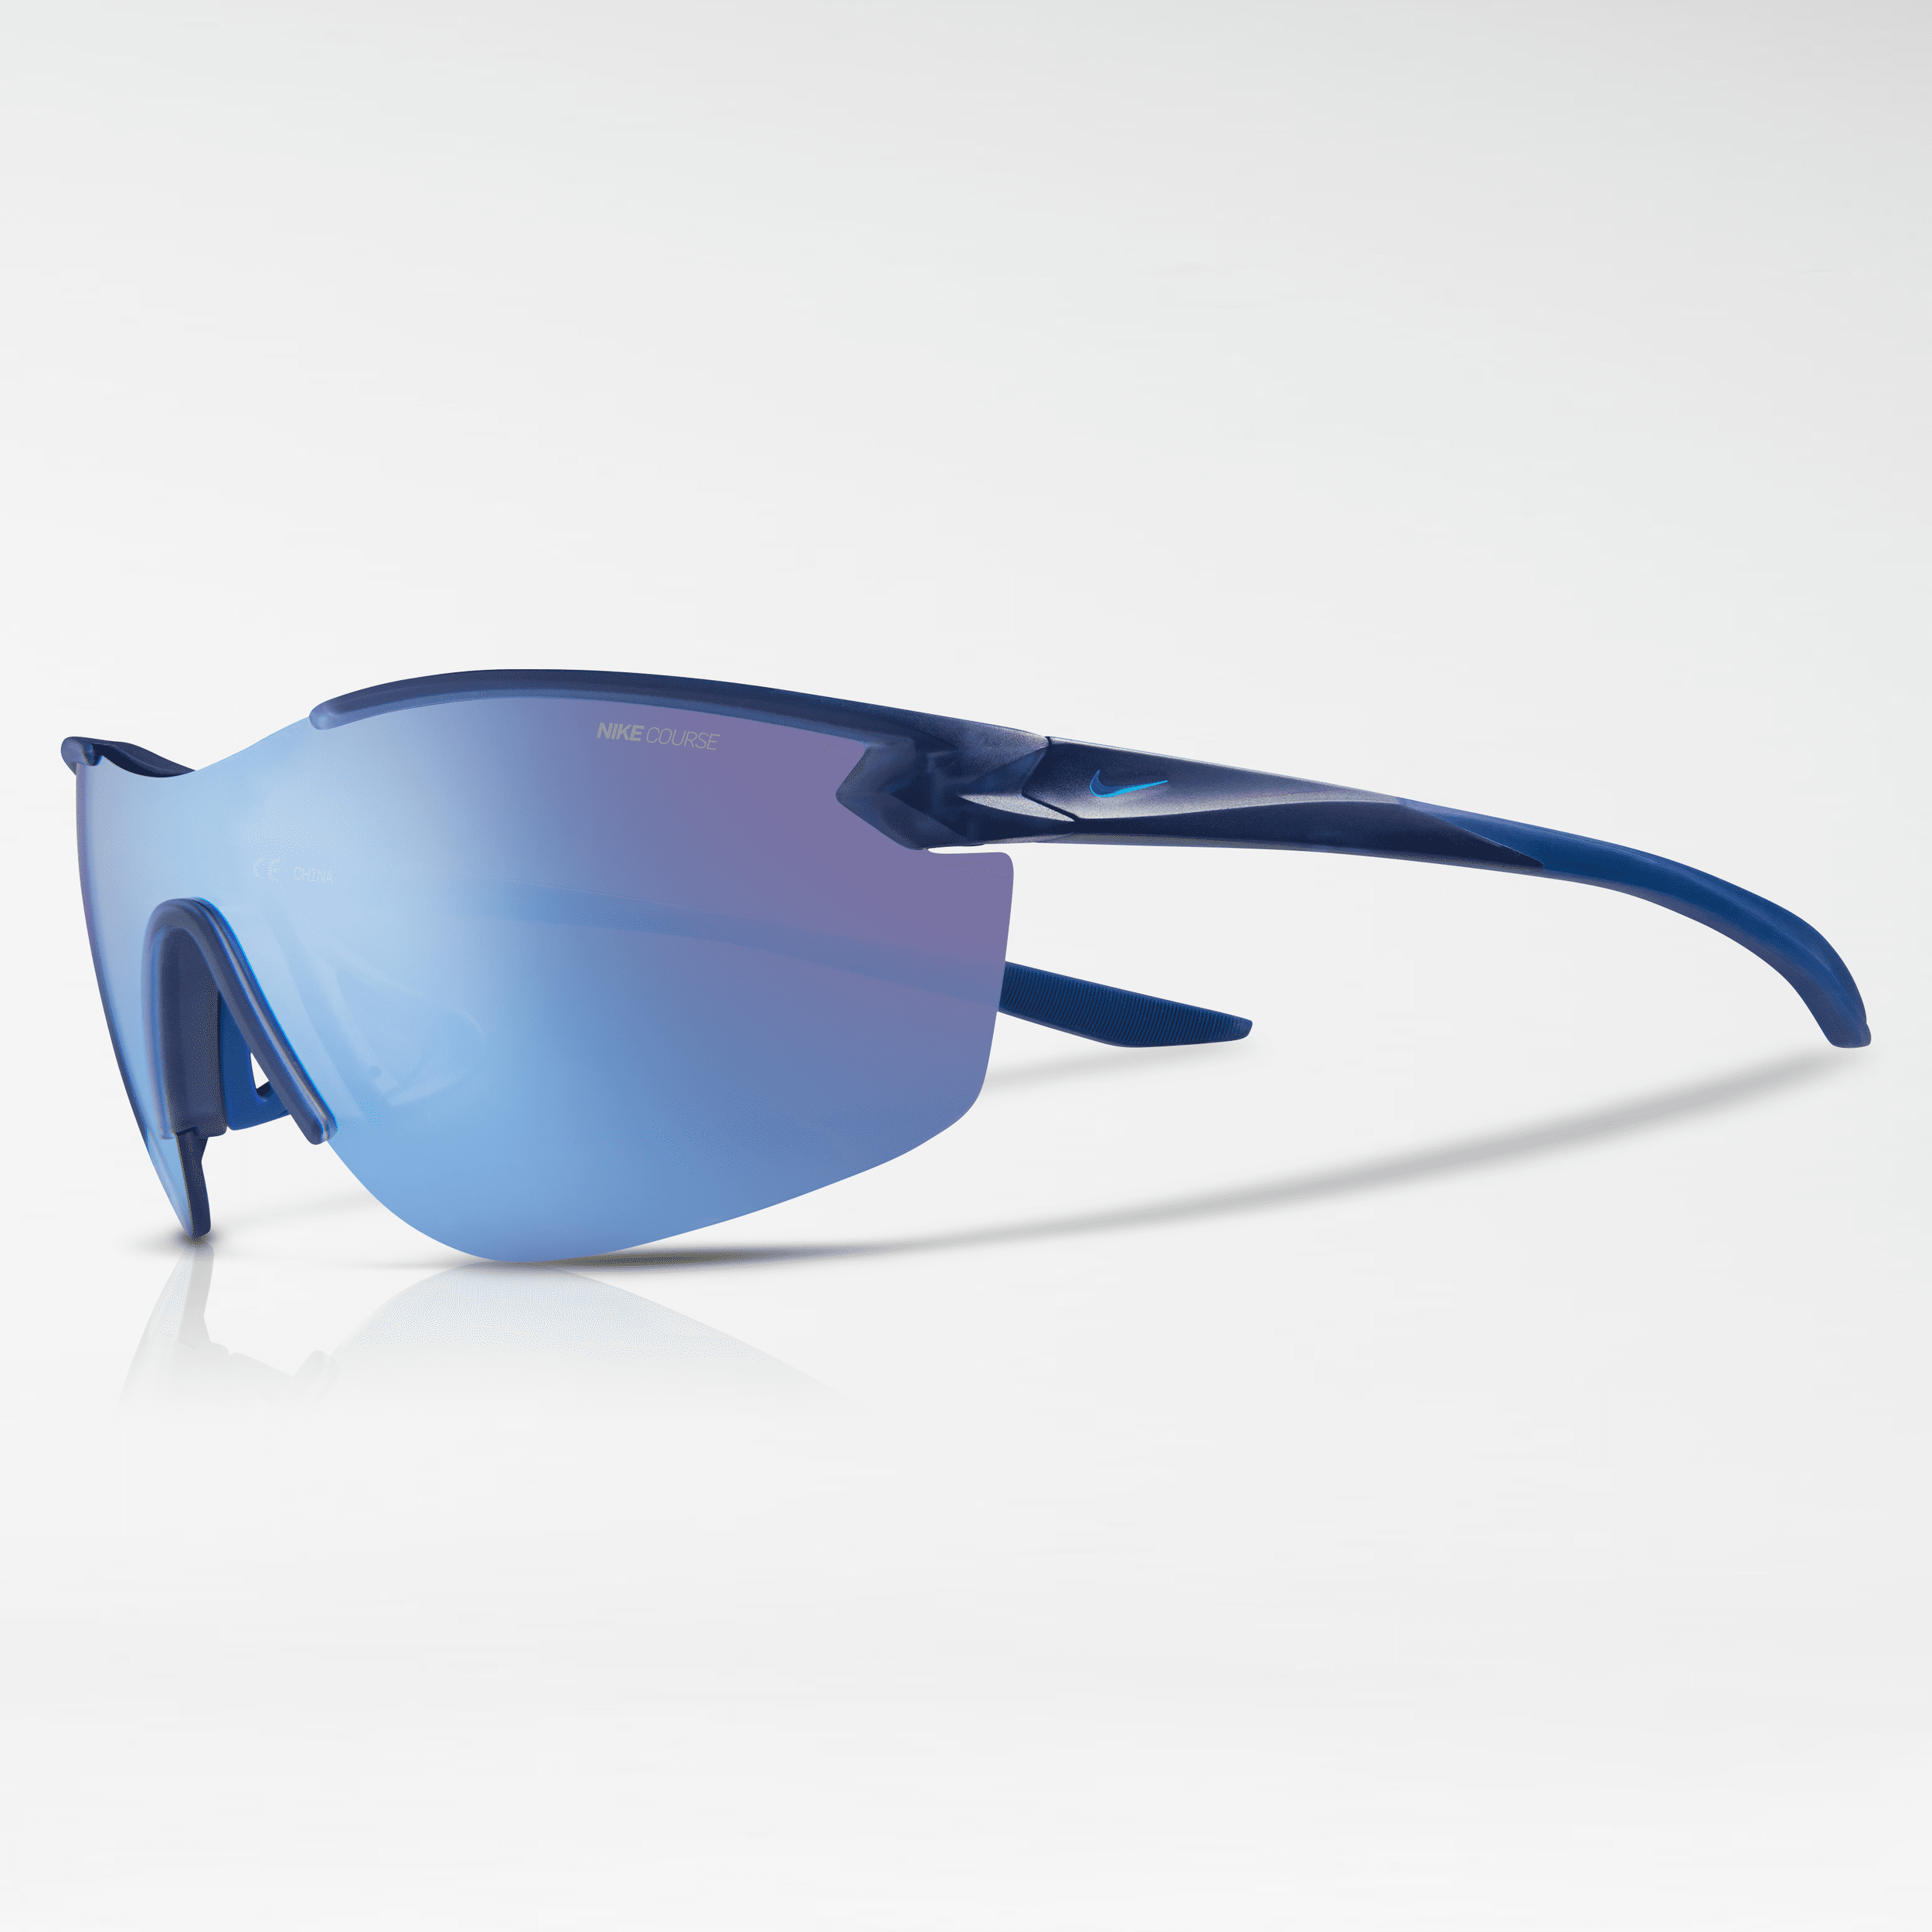 Nike Women's Victory Elite Road Tint Sunglasses In Blue